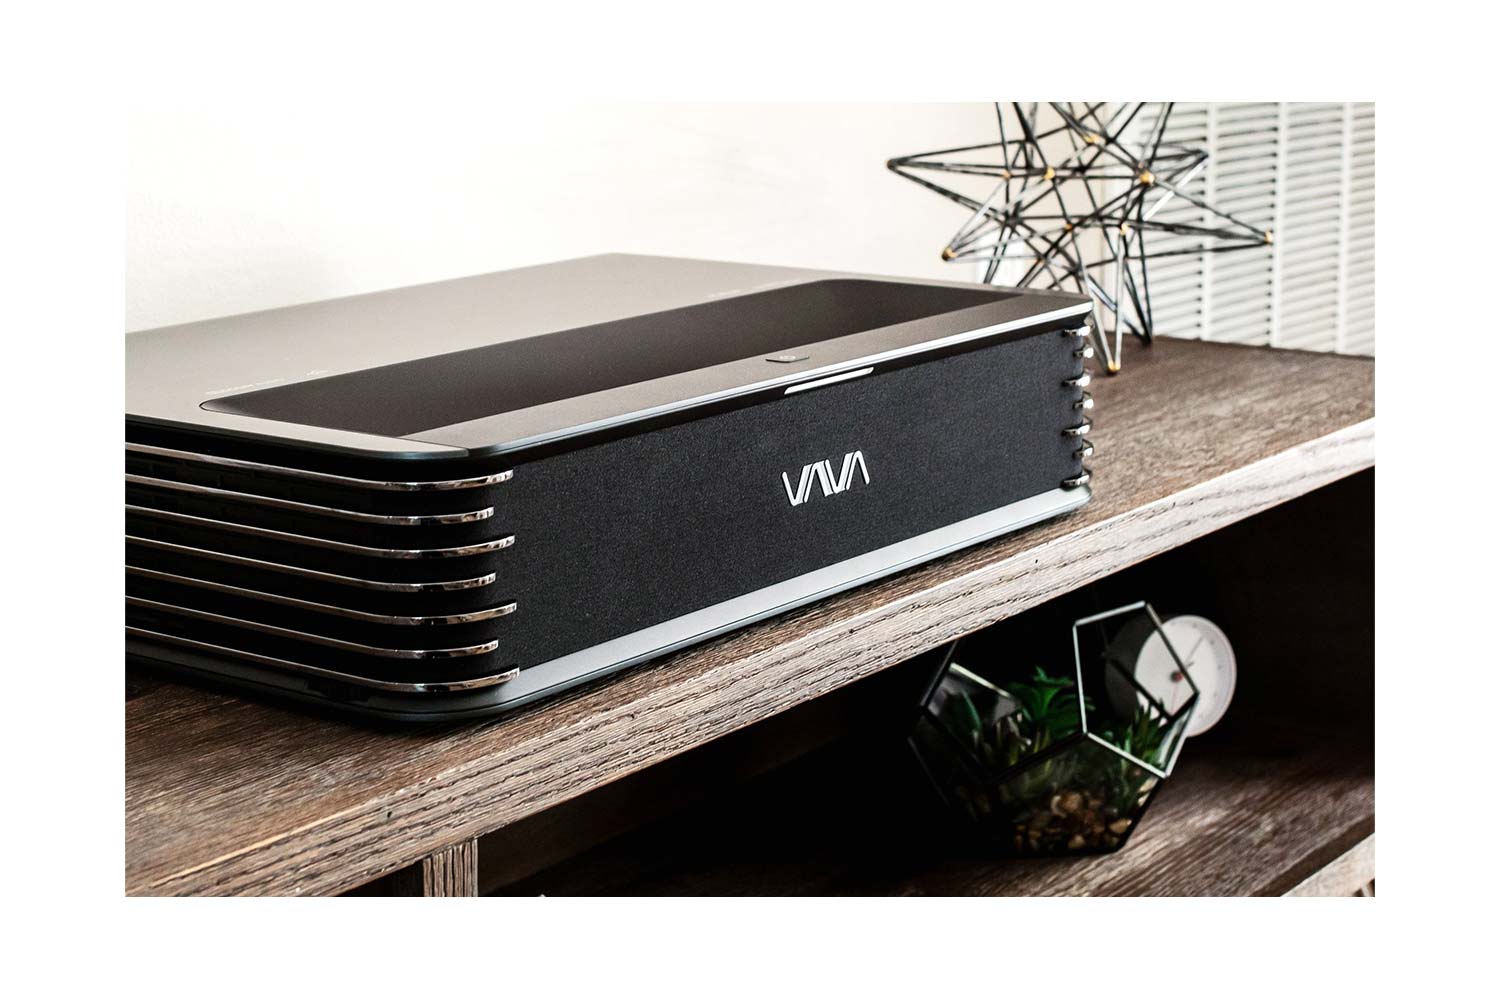 VAVA Chroma 4K UHD RGB Laser TV Beamer - HEIMKINORAUM Edition